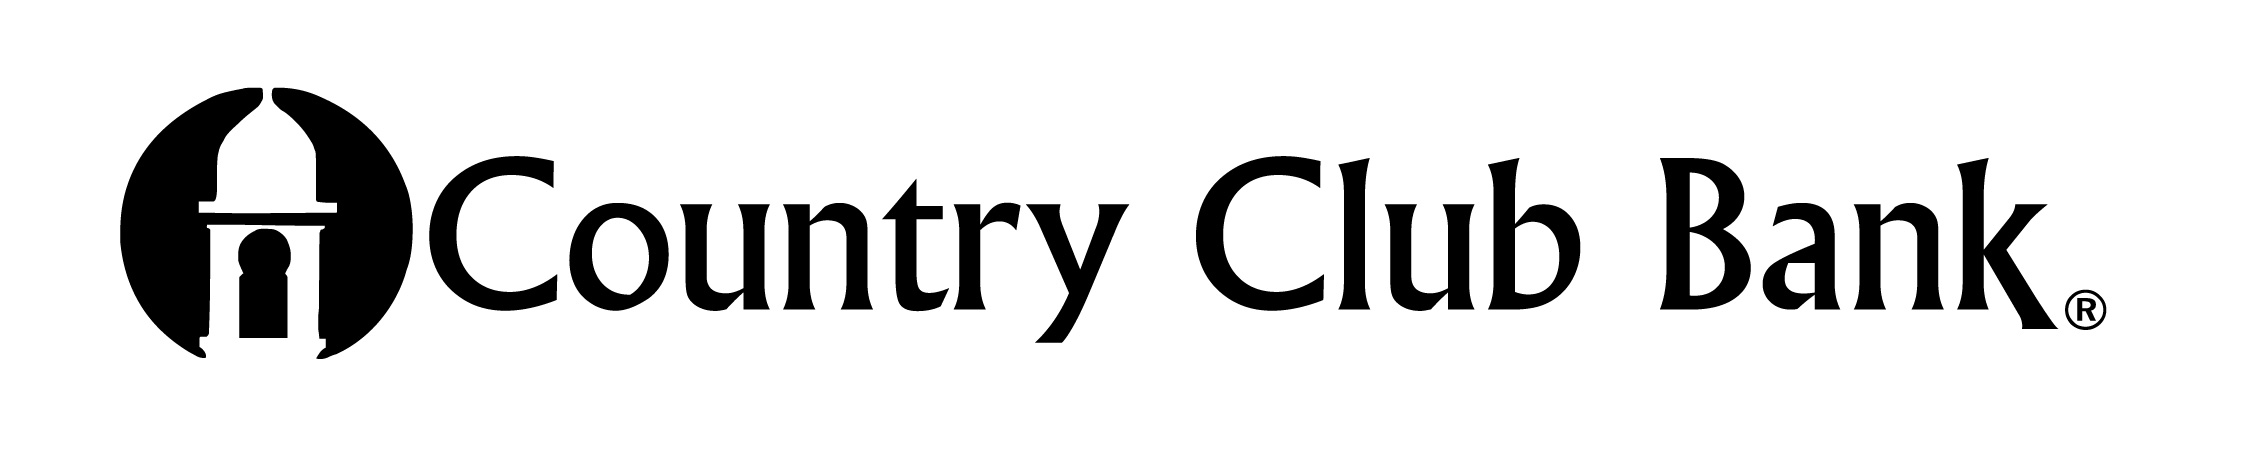 Country Club Bank logo-01